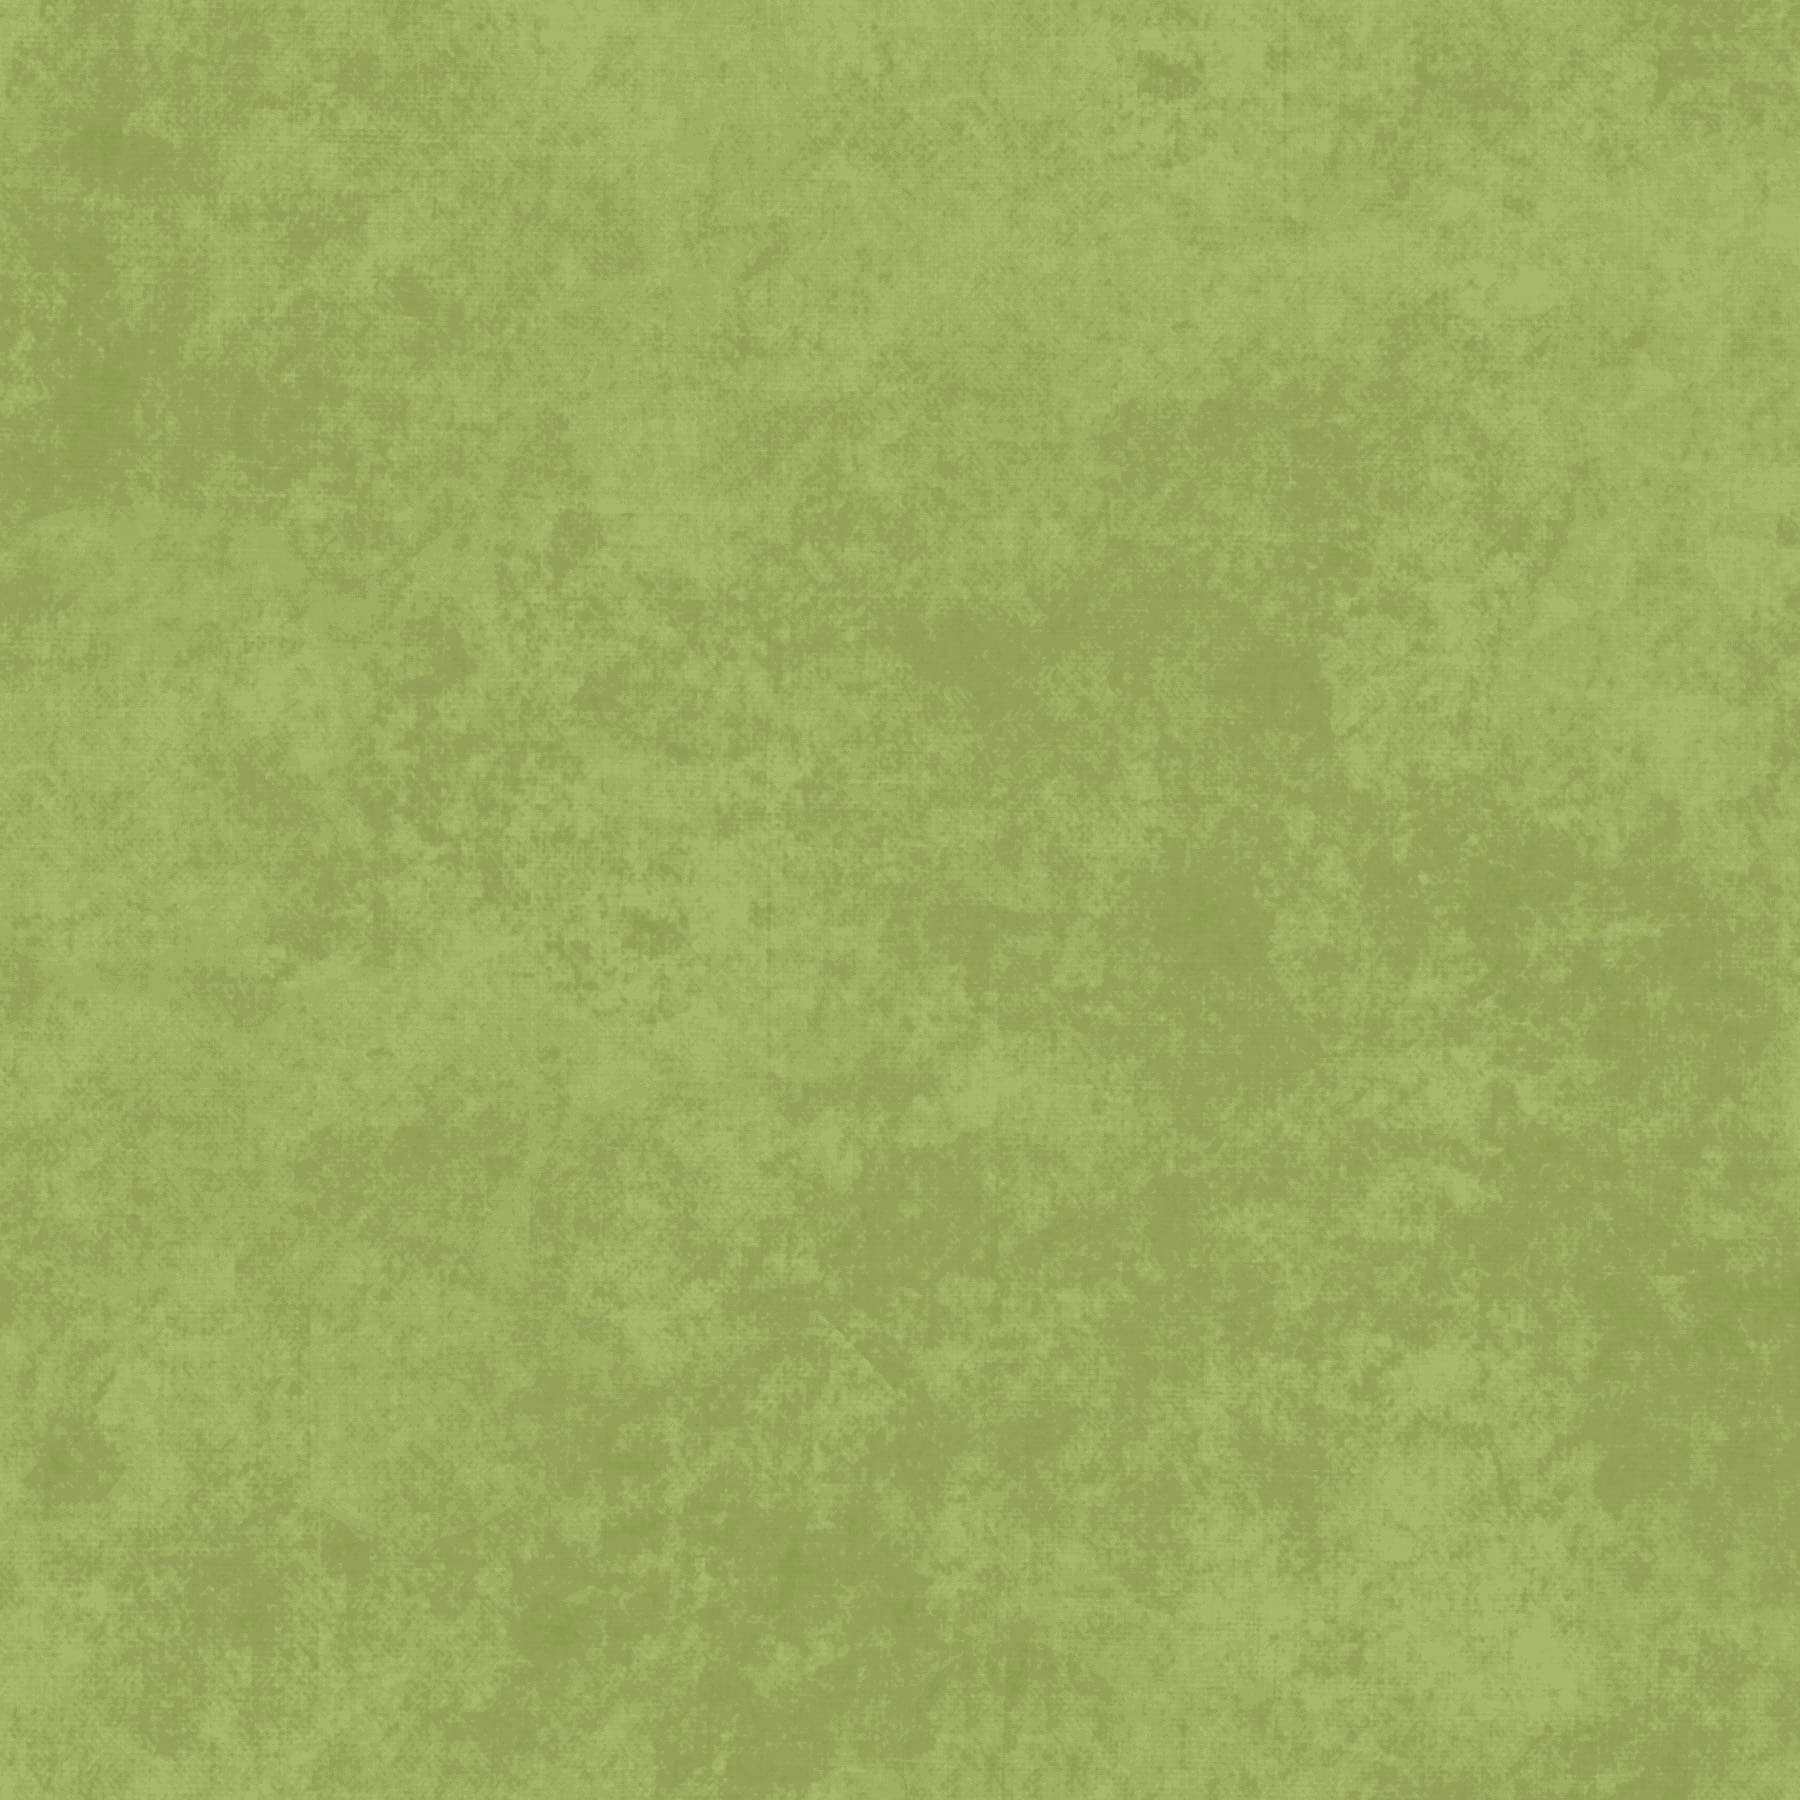 Shadow Play - Lime Green / Grass Green (513-GG3) Tonal Blender by Maywood Studio